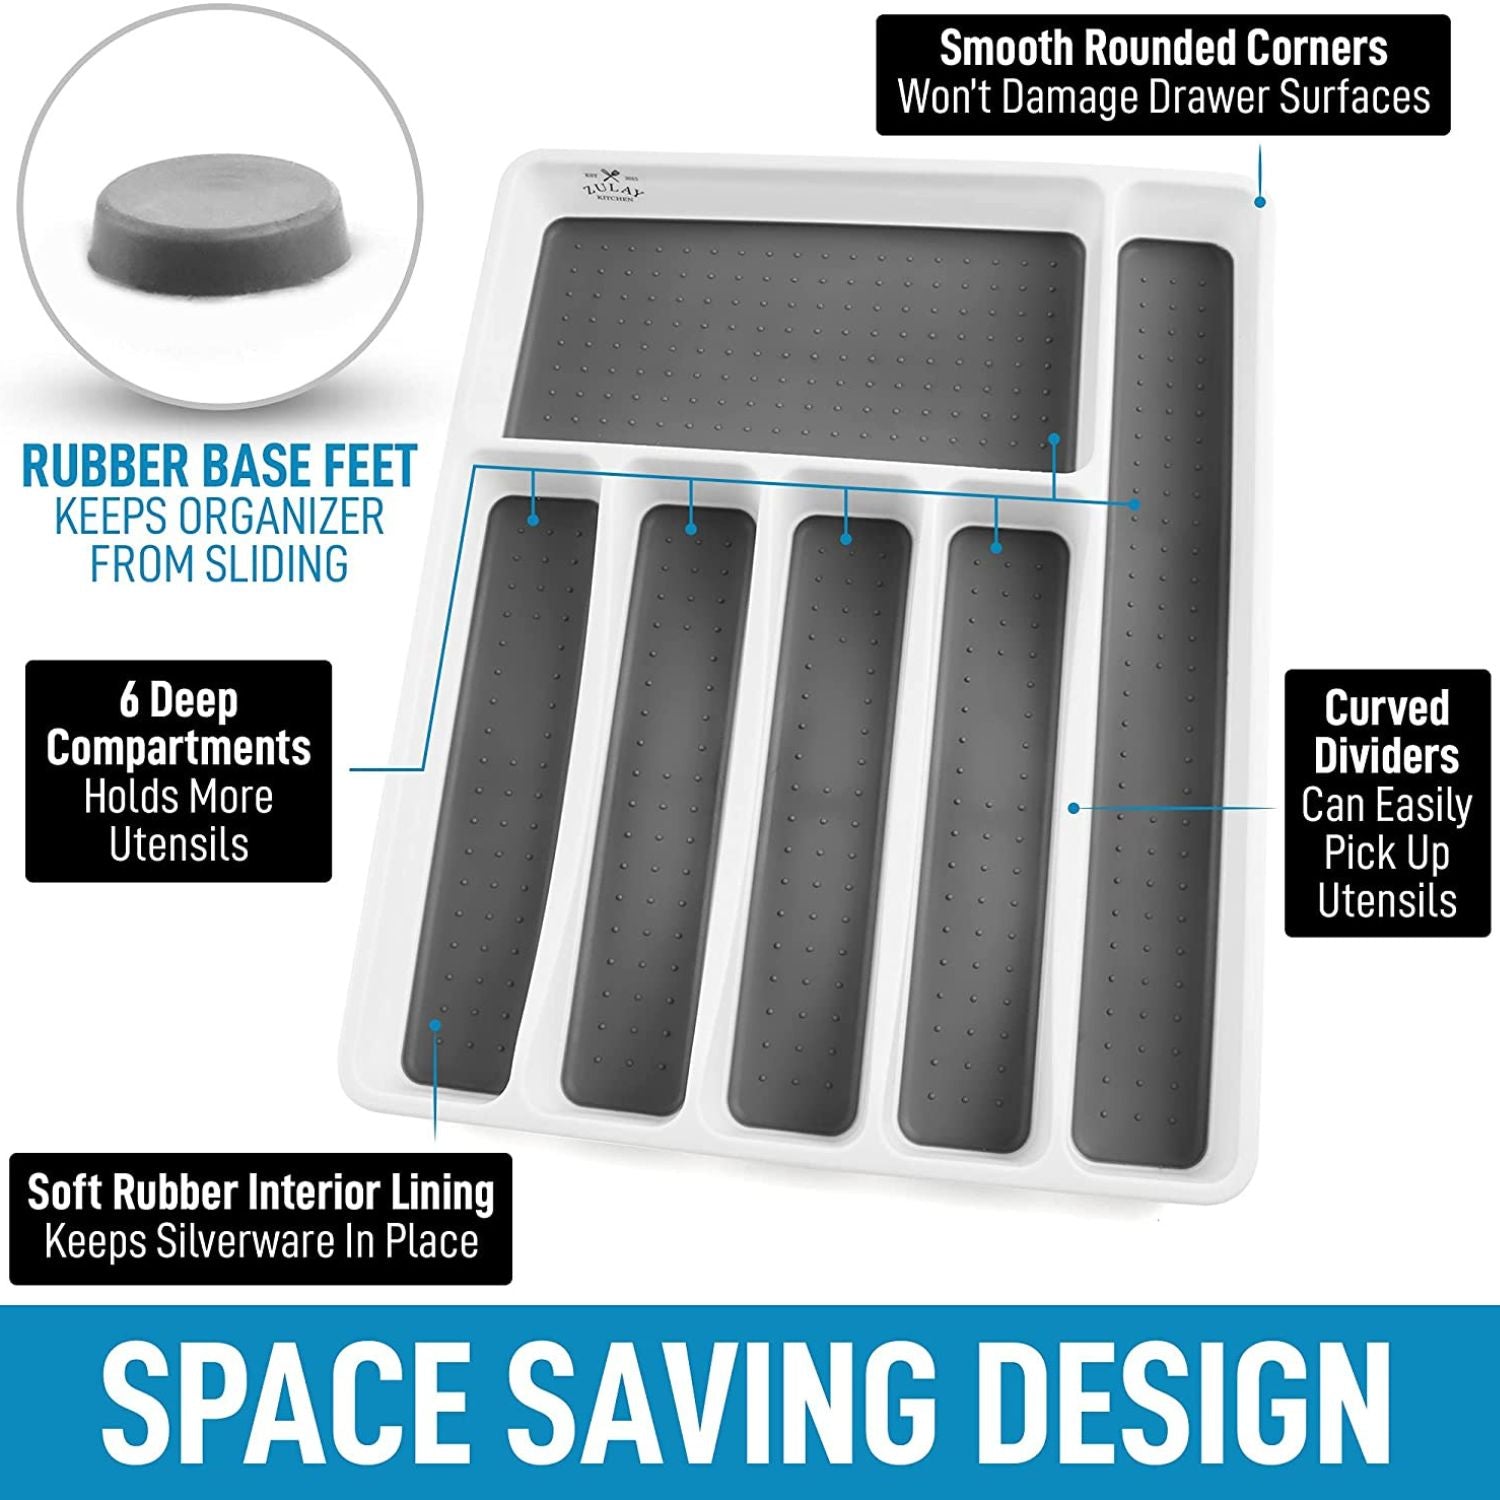 Space saving design utensil organizer